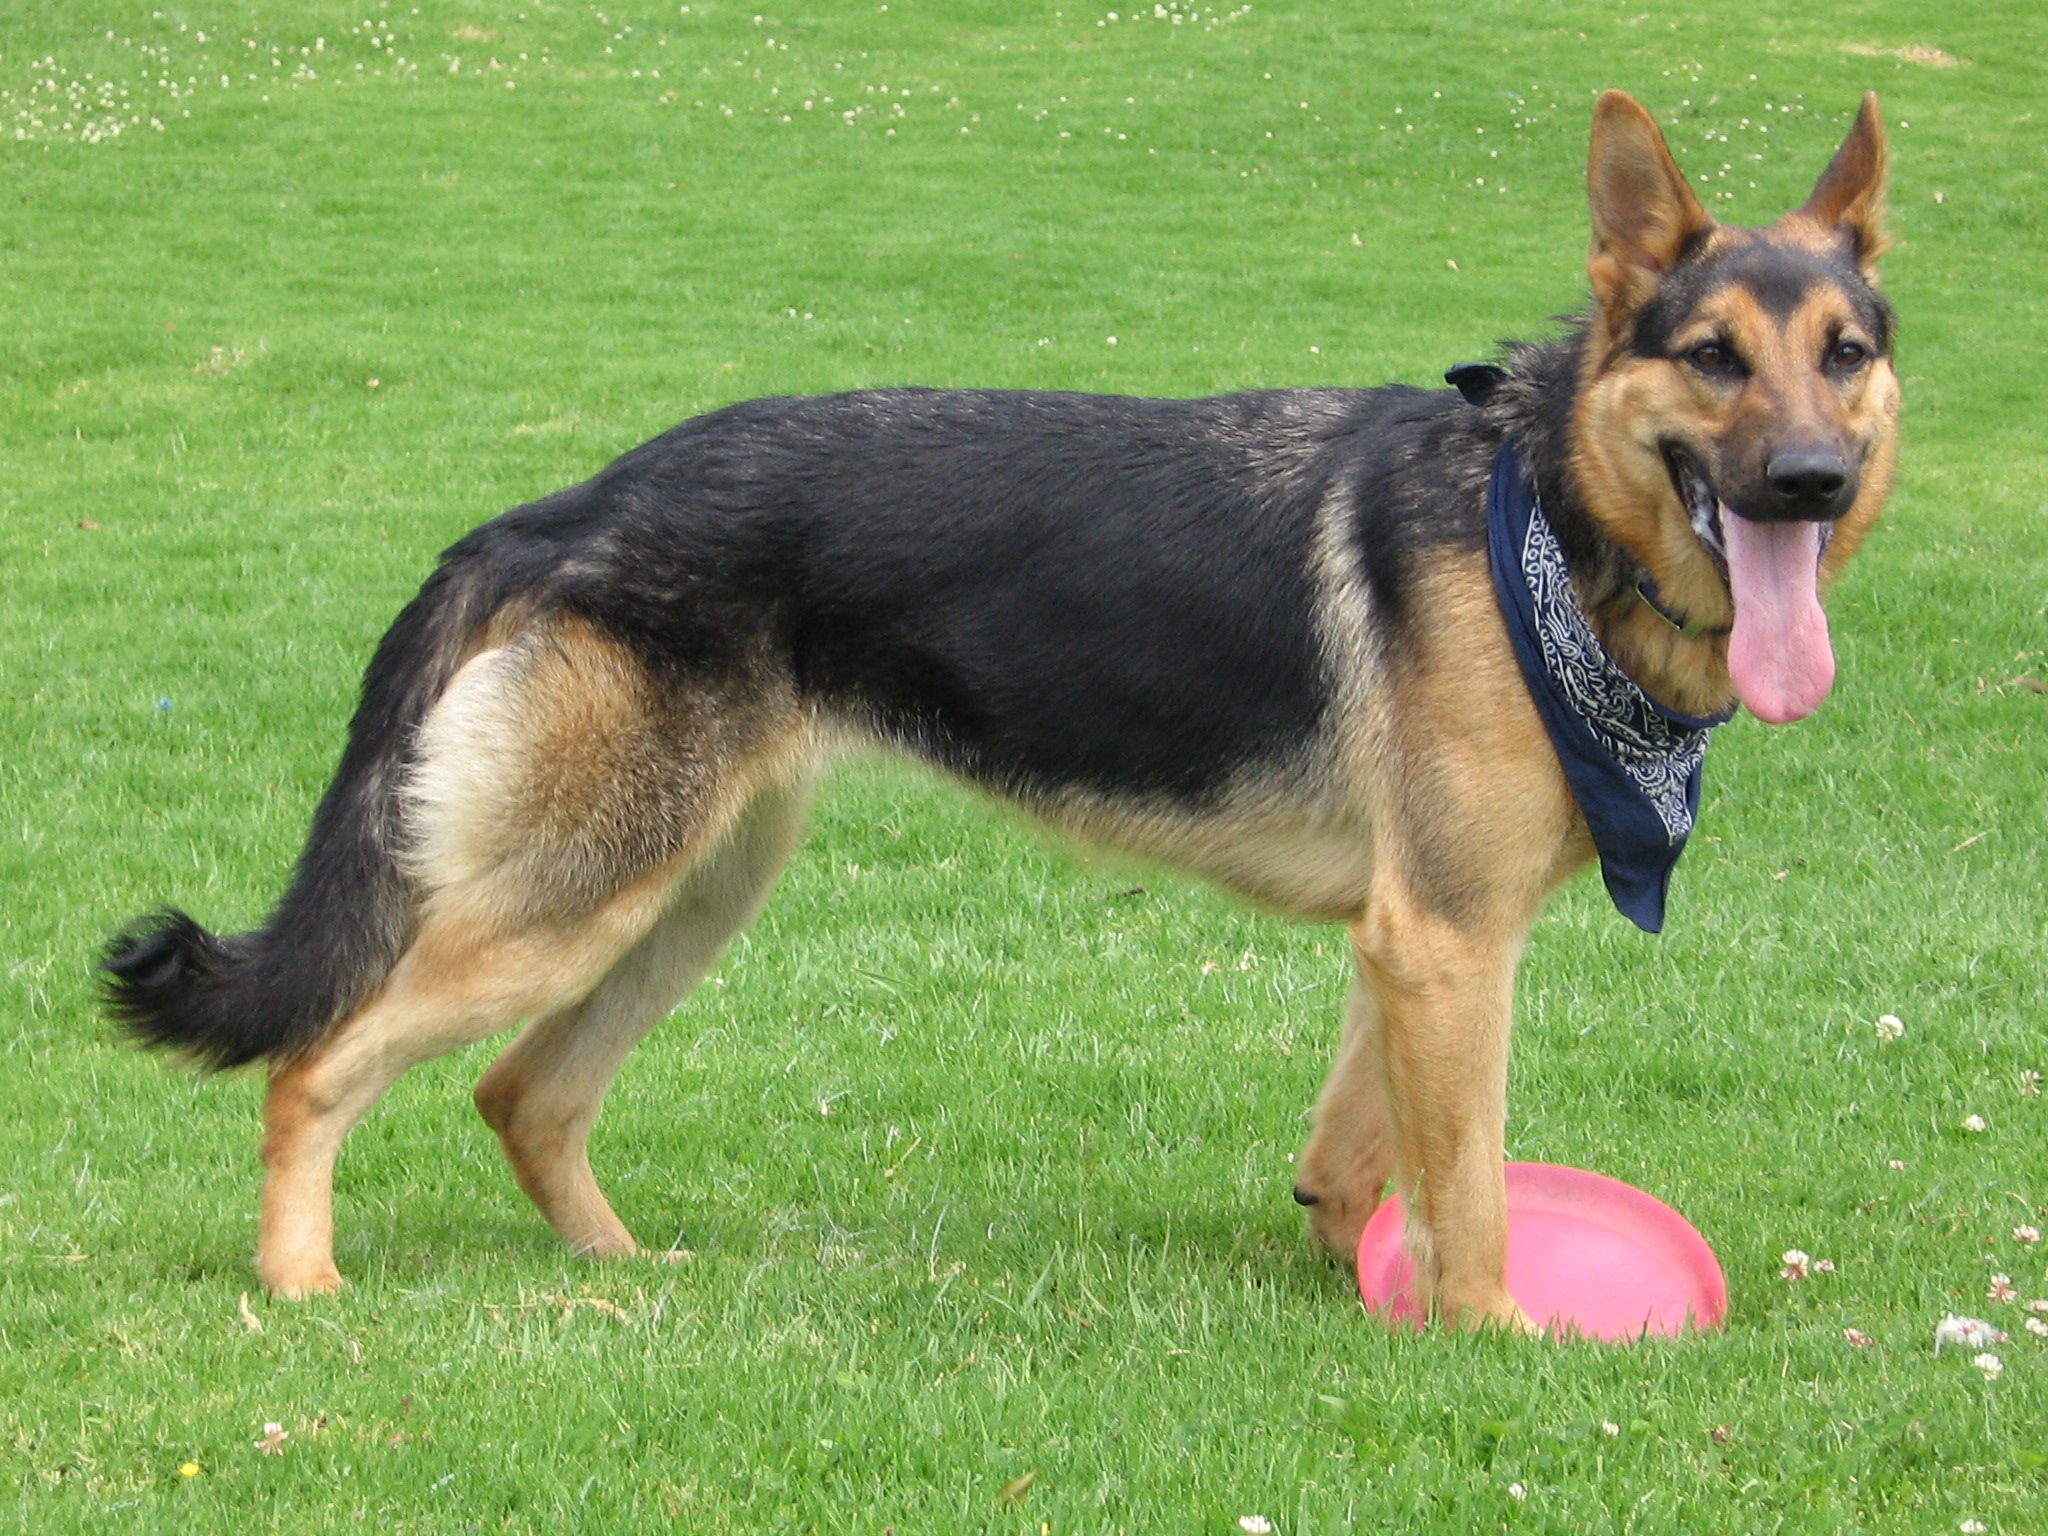 http://upload.wikimedia.org/wikipedia/commons/1/10/German_Shepherd_Dog_with_disc.jpg